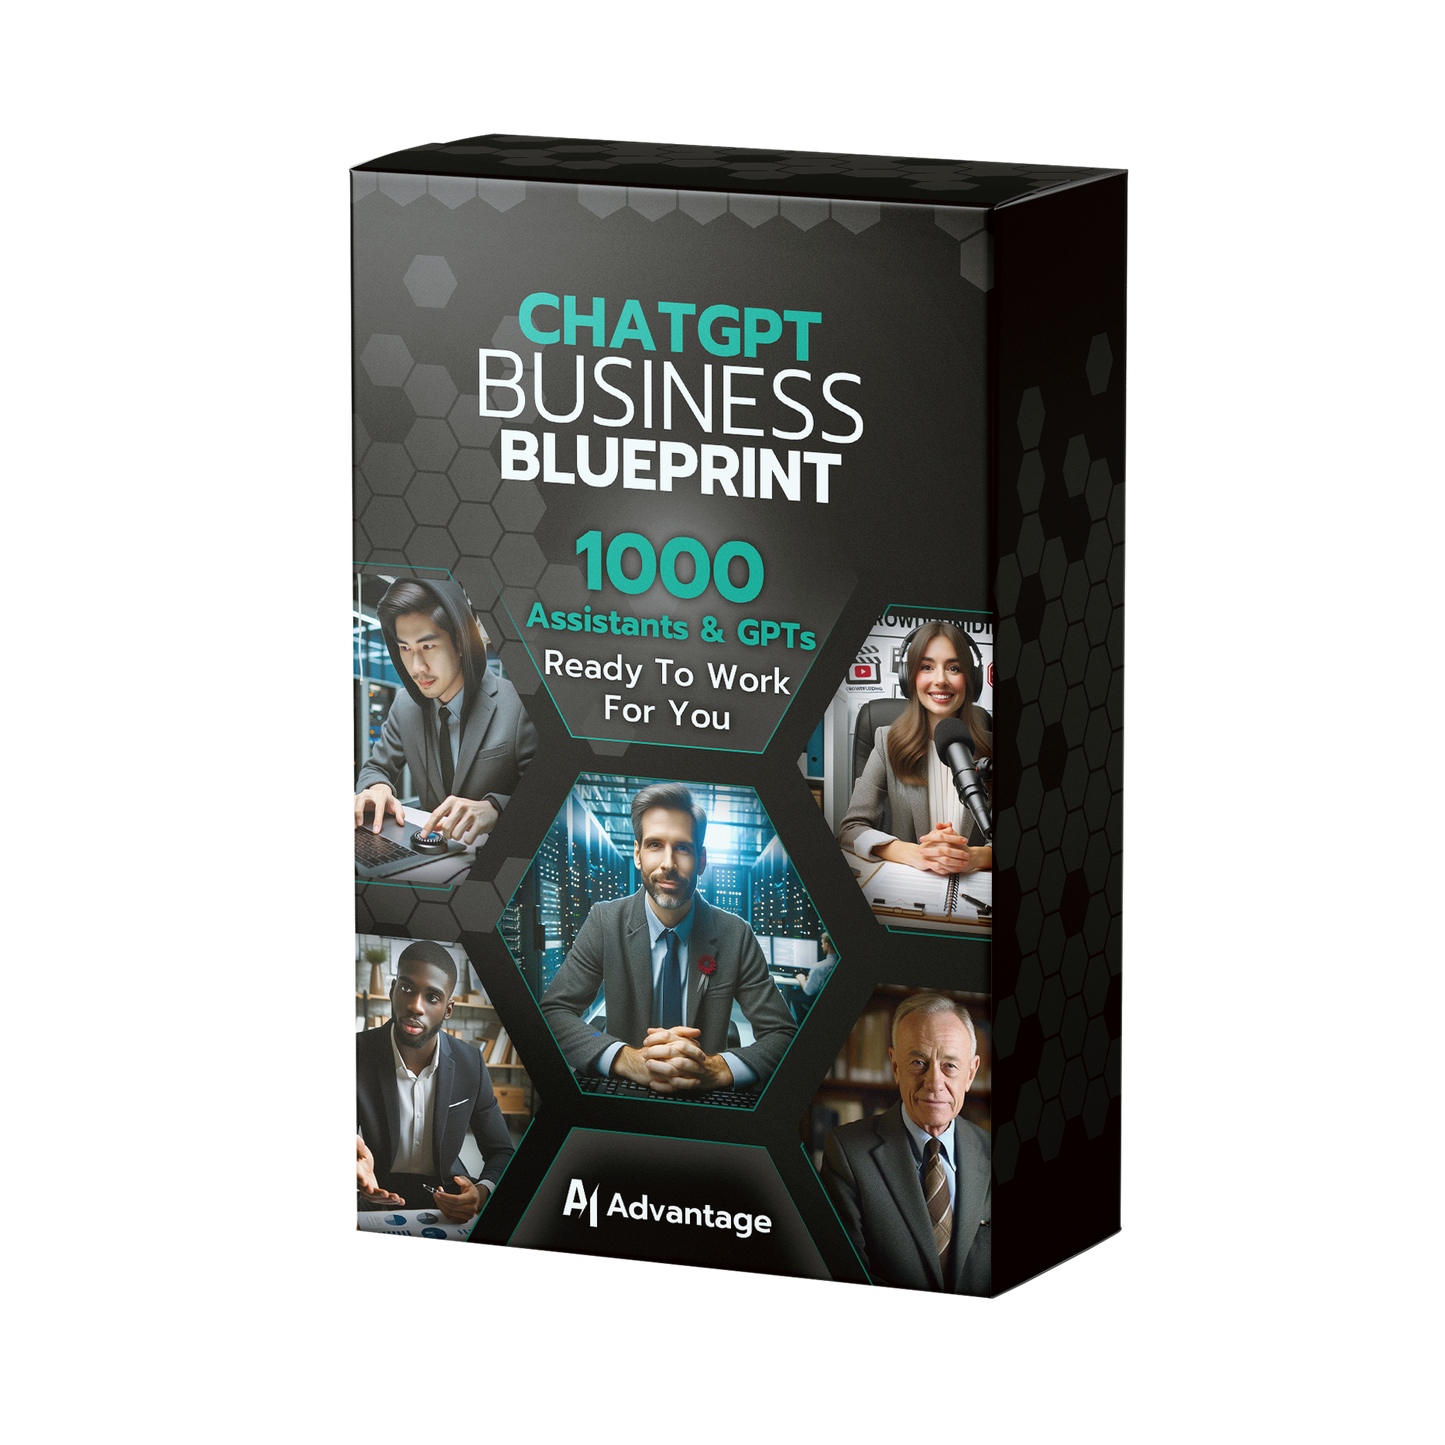 ChatGPT Business Blueprint - All 1068 Assistants & 32.000 Prompts